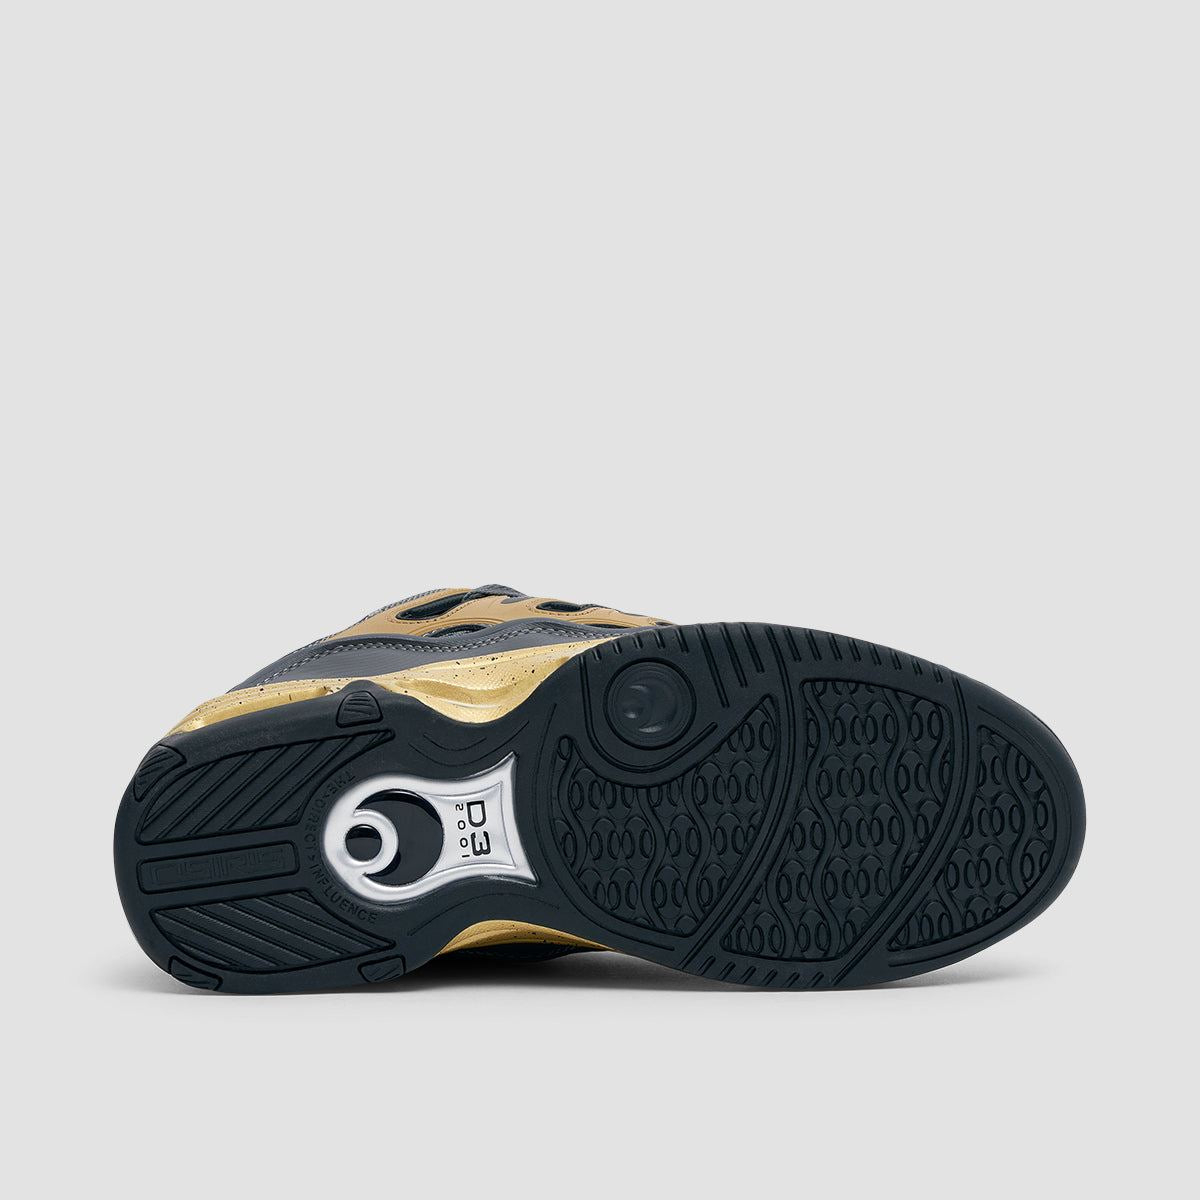 Osiris D3 2001 Shoes - Charcoal/Gold/Black